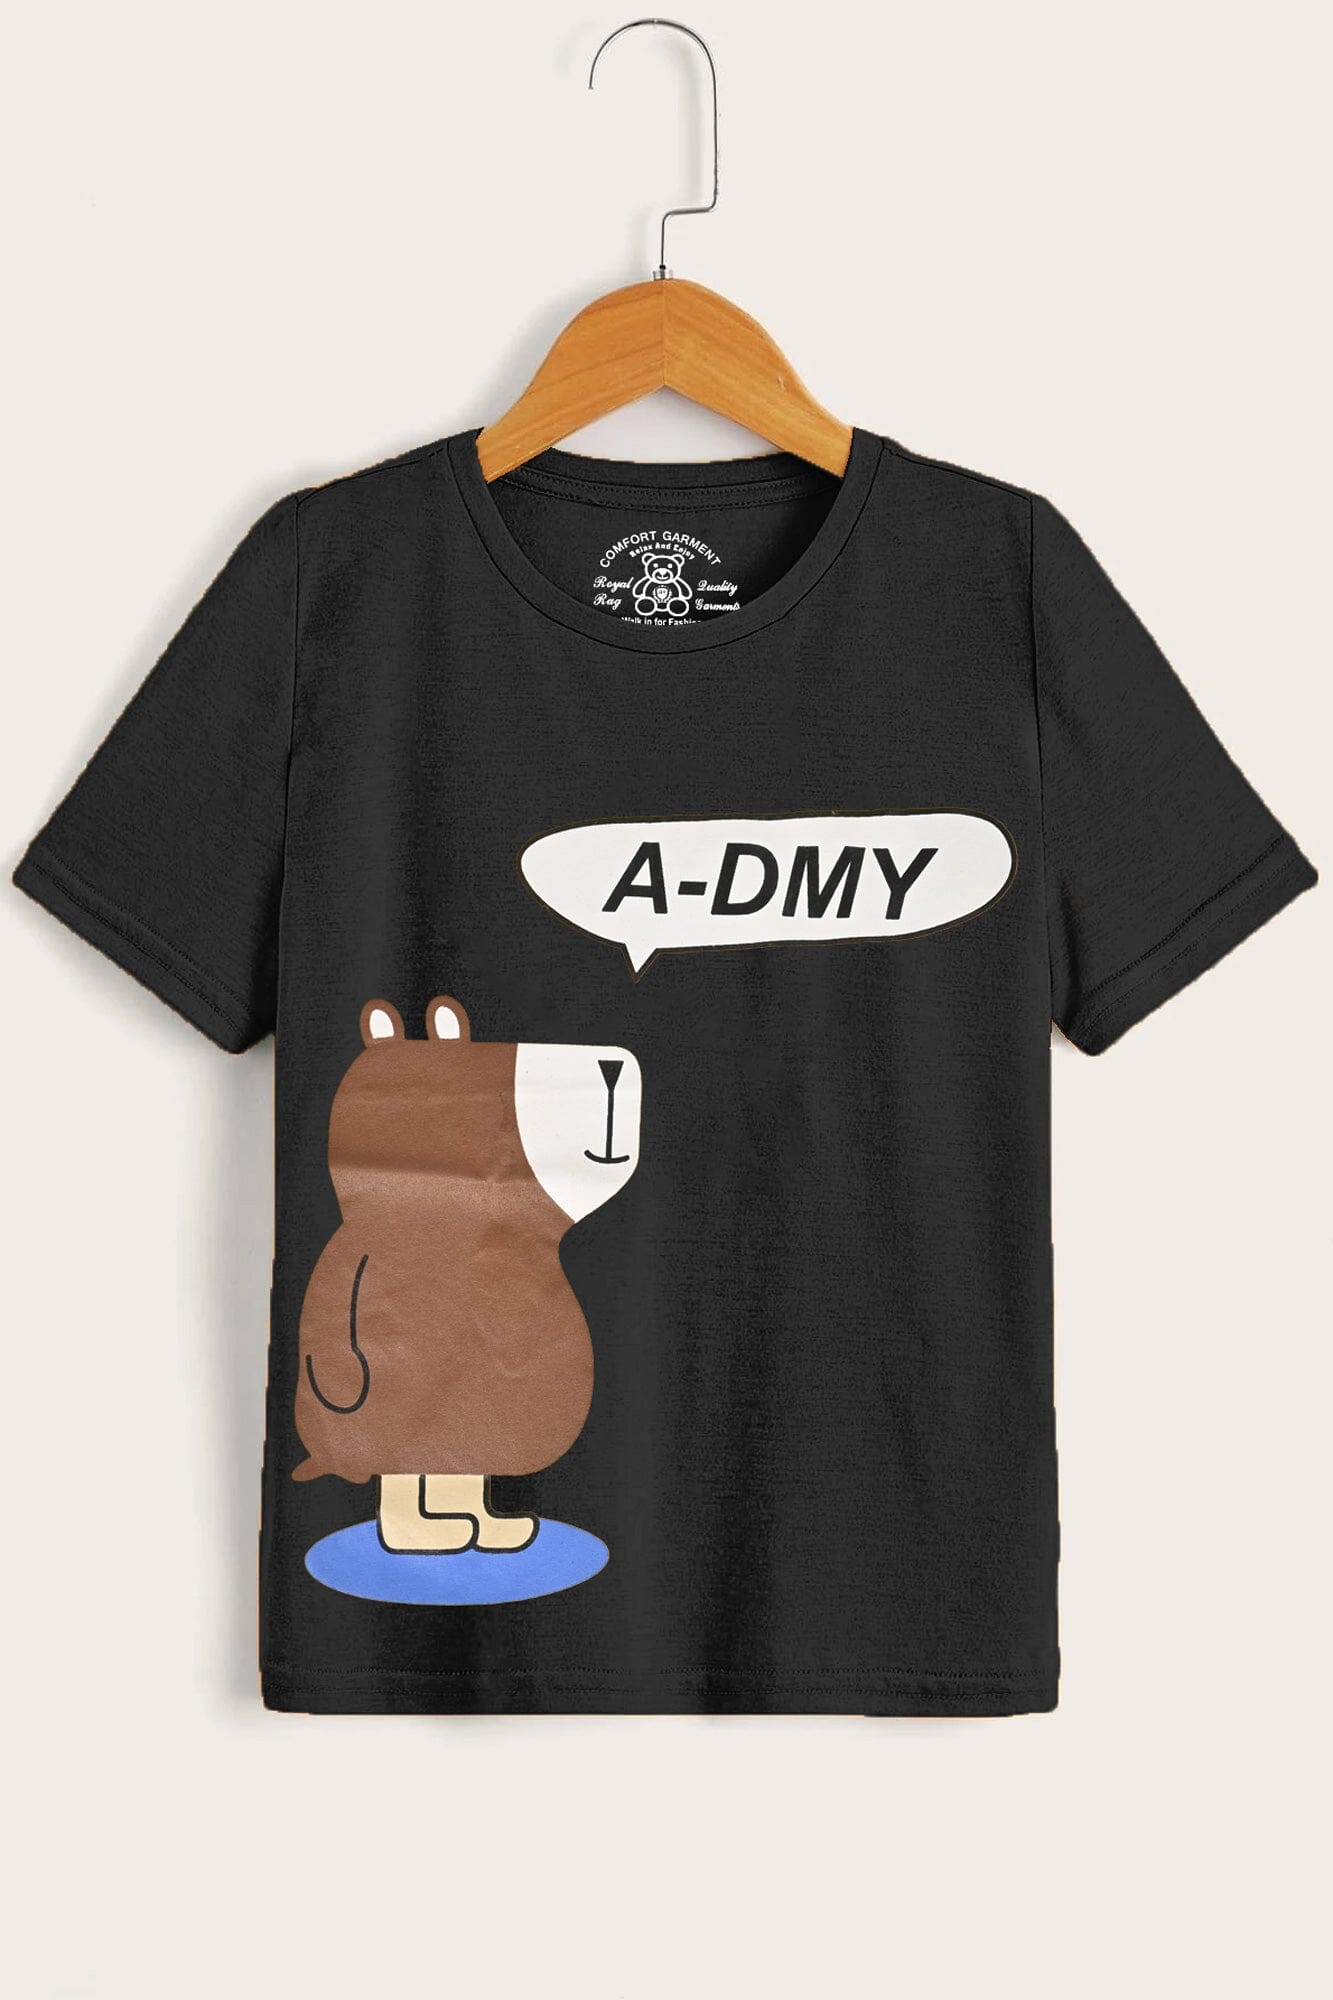 Comfort Kid's A-DMY Printed Short Sleeve Tee Shirt Boy's Tee Shirt Usman Traders Black 2-3 Years 